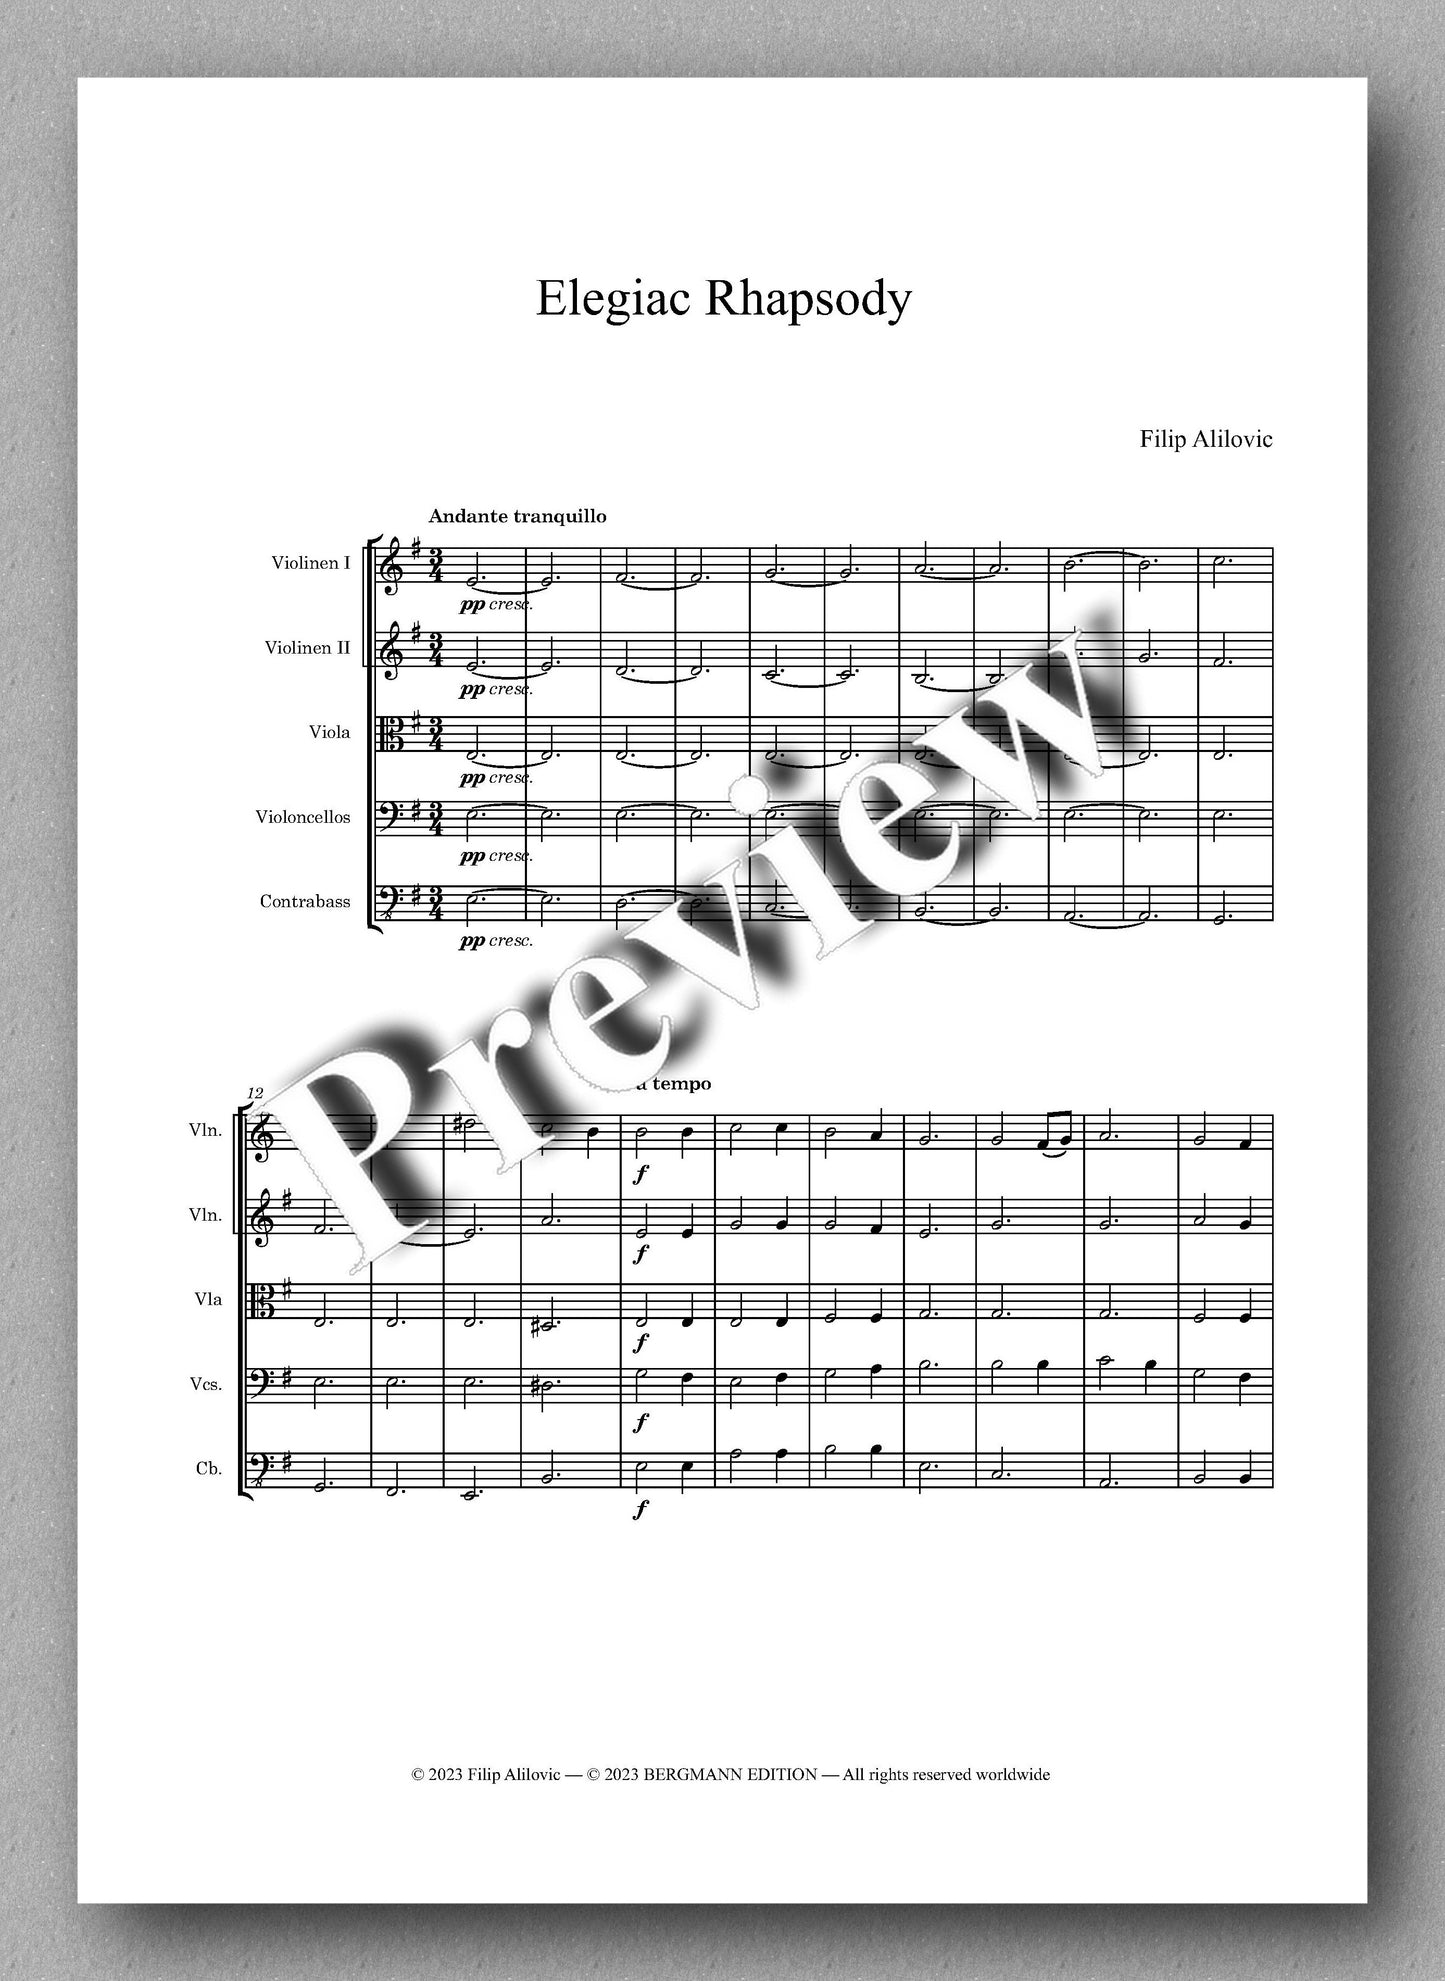 Filip Alilovic, Elegiac Rhapsody - preview of the music score 1